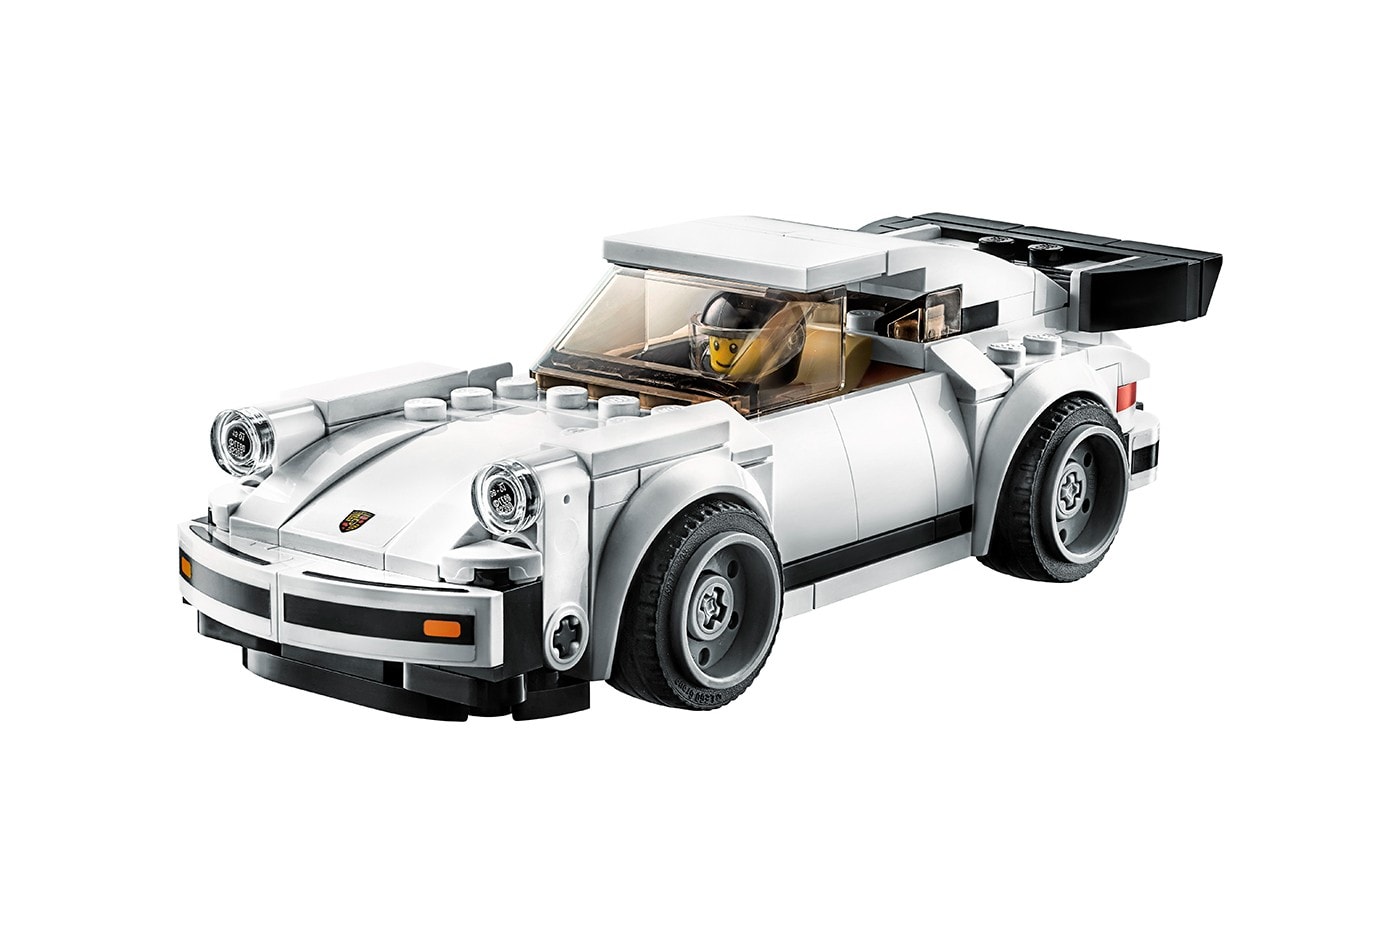 LEGO 打造 1974 年 Porsche 911 Turbo 3.0 積木模型